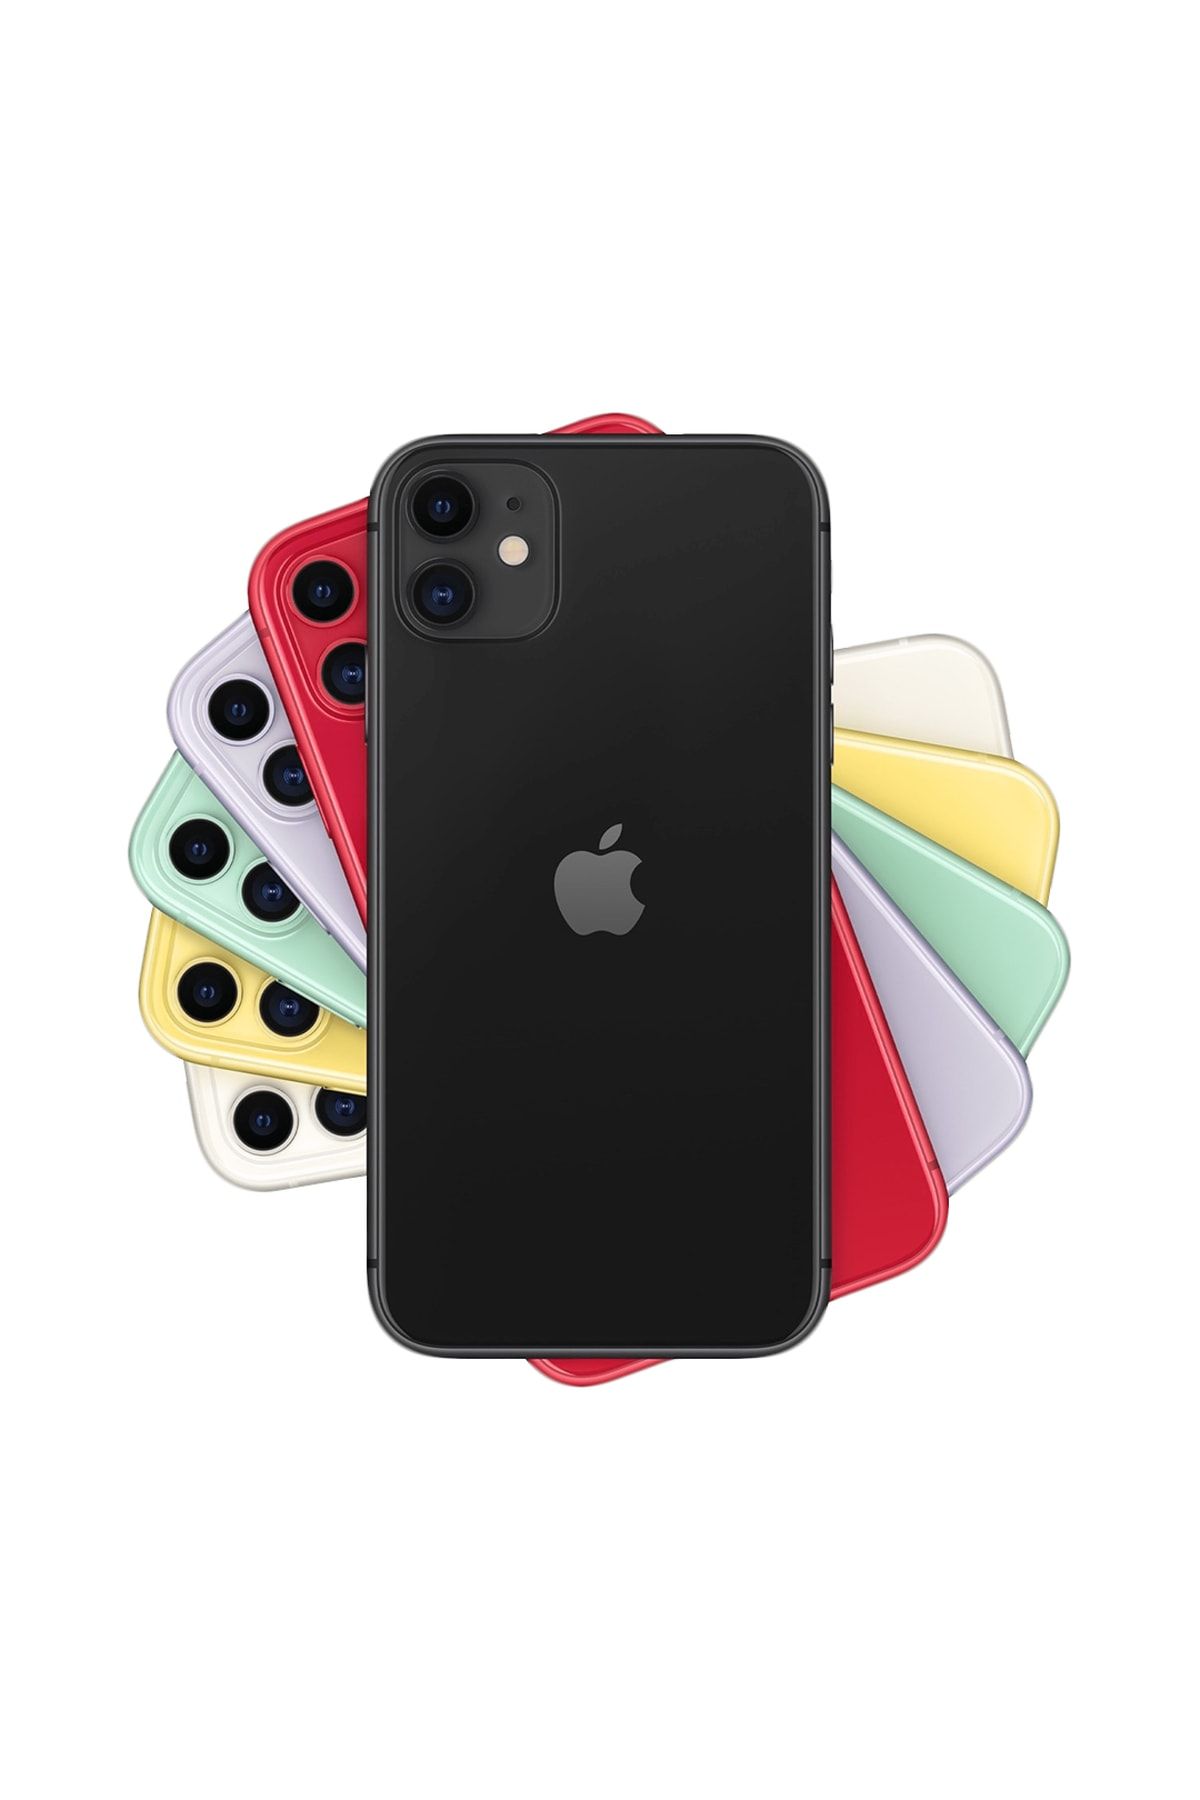 Apple Yenilenmiş iPhone 11 64 GB Siyah Cep Telefonu (12 Ay Garantili) - A Kalite